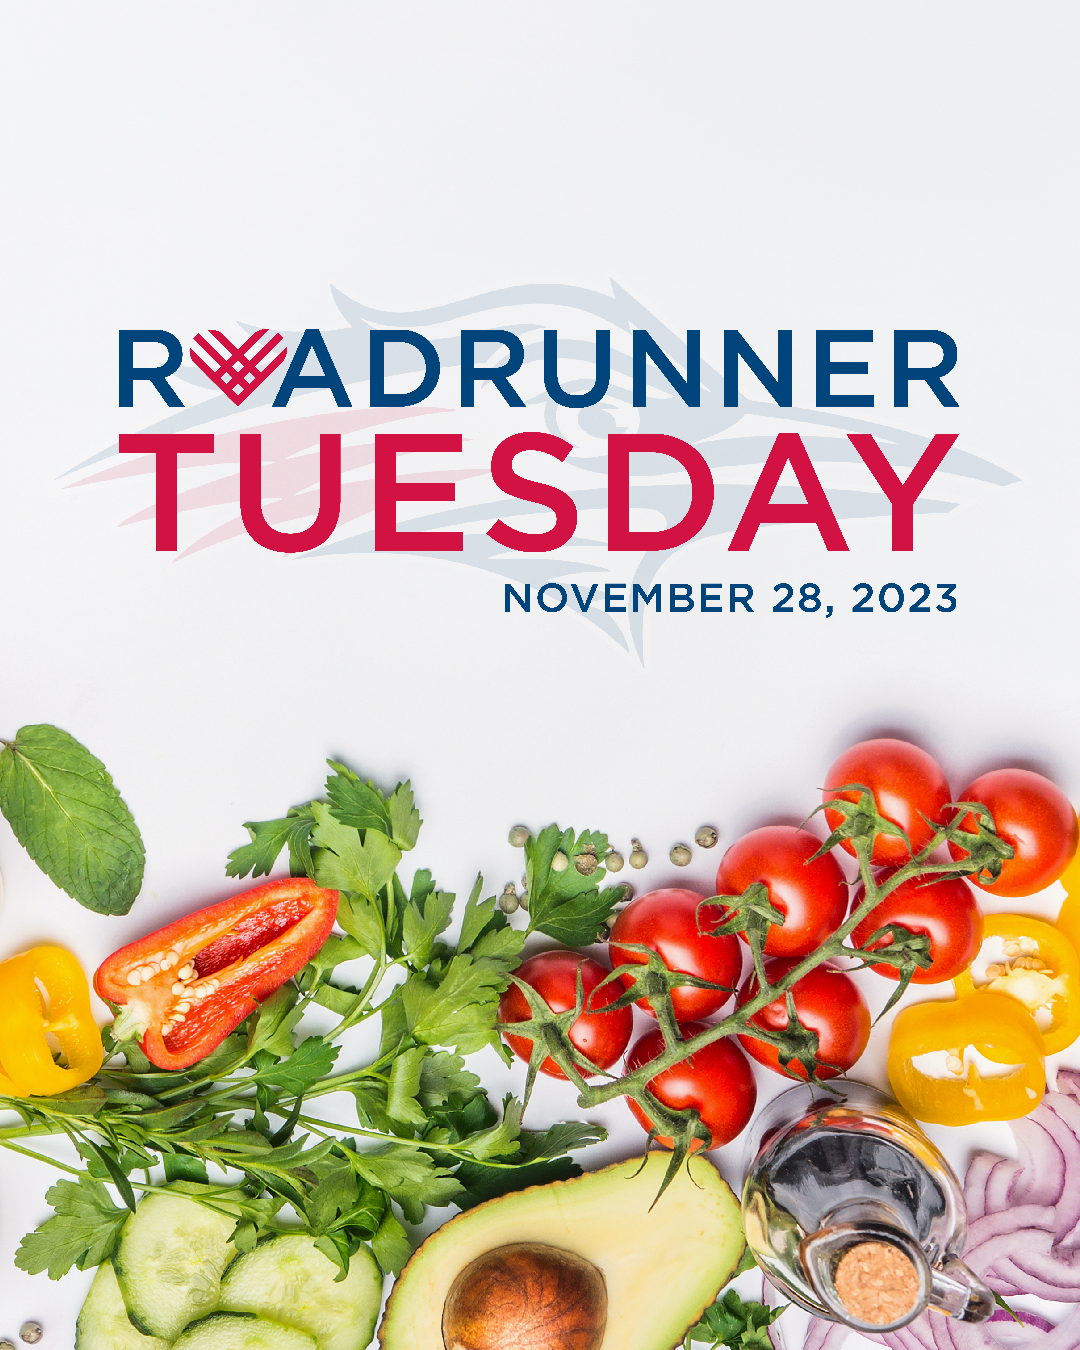 Roadrunner Tuesday graphic